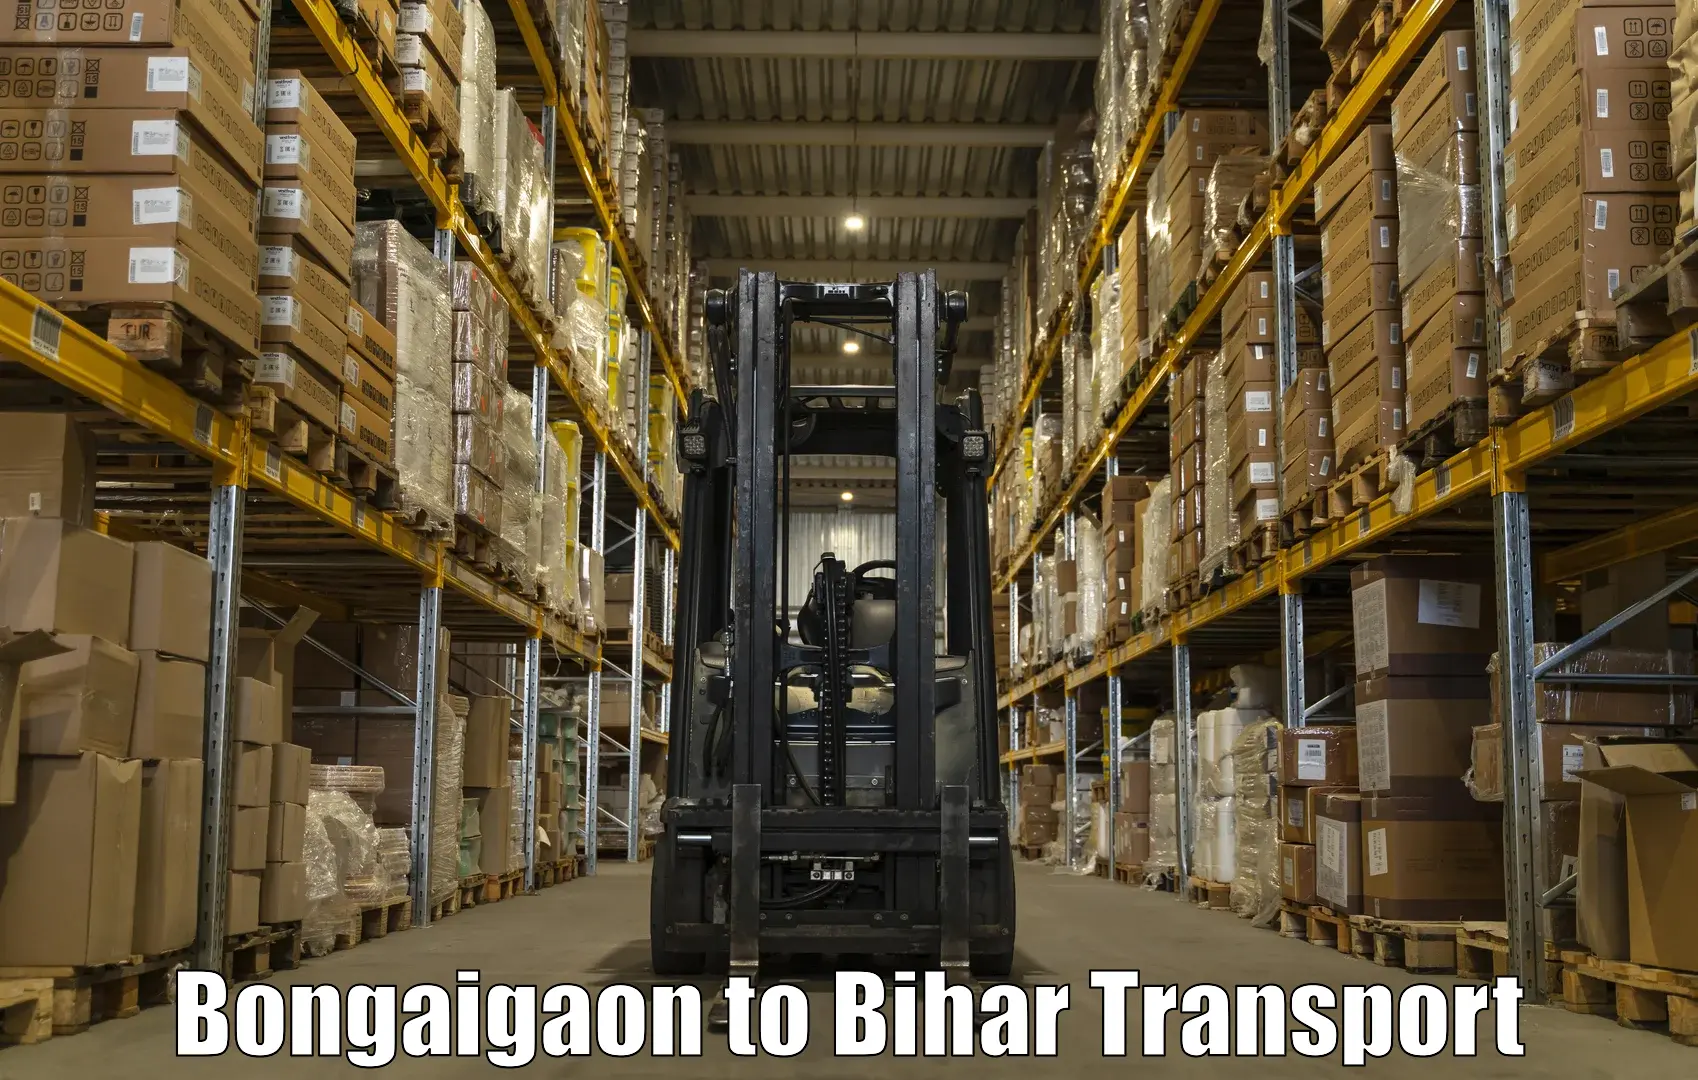 Transport in sharing in Bongaigaon to Saharsa